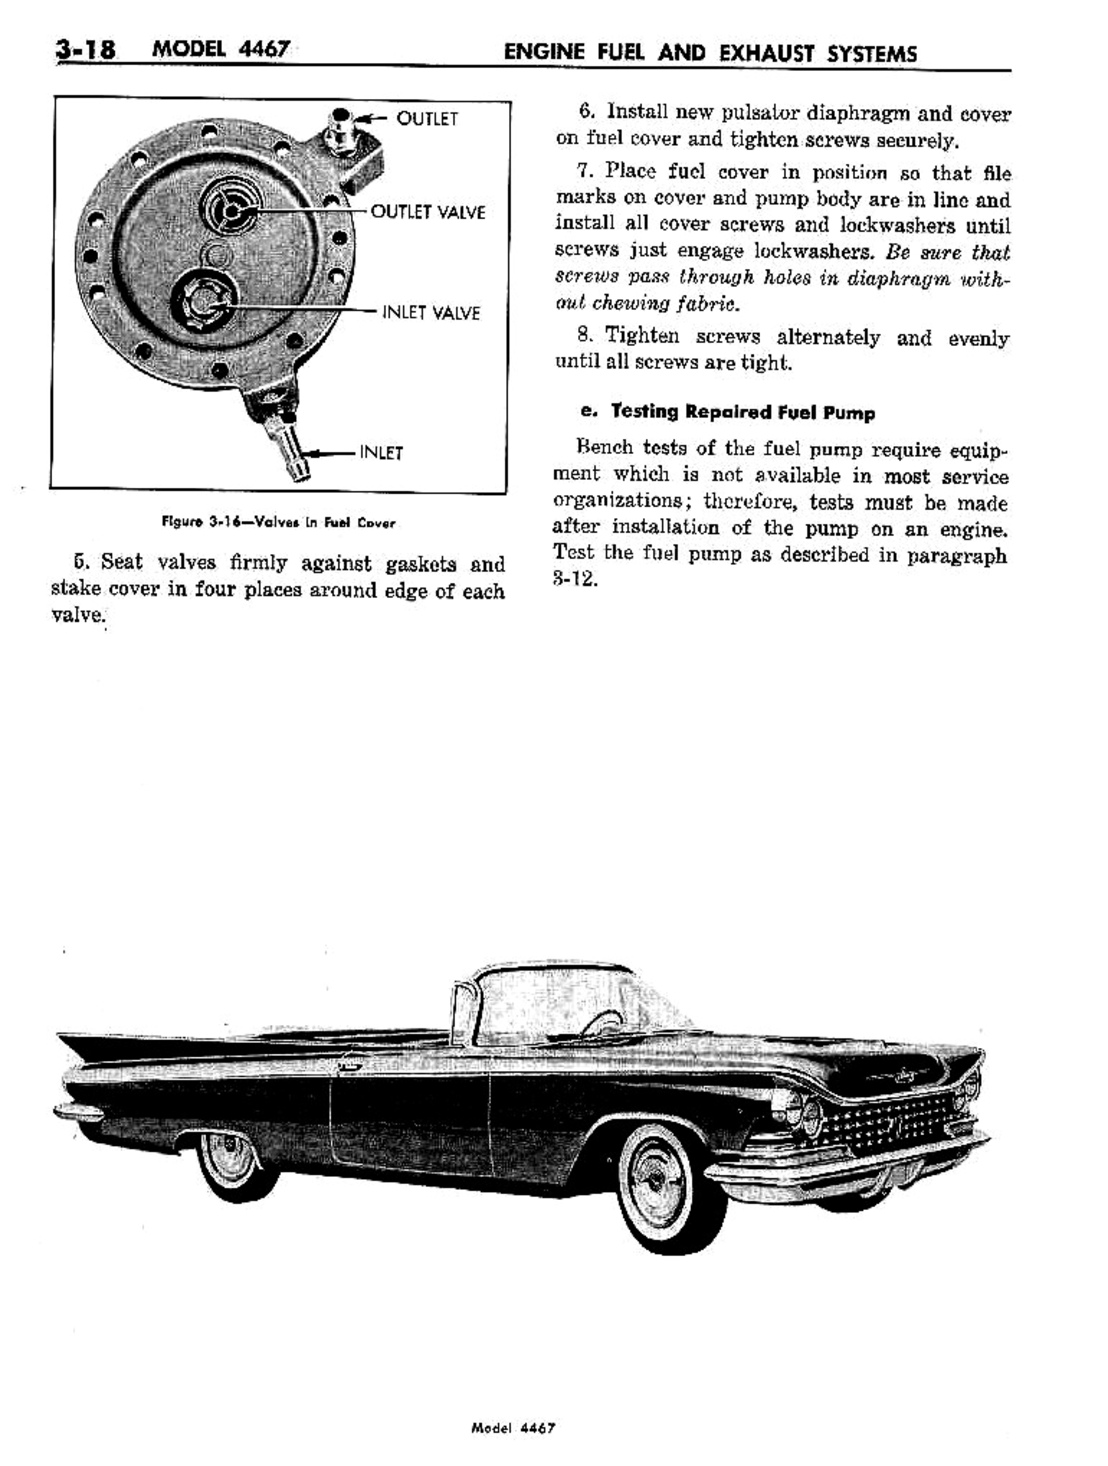 n_04 1959 Buick Shop Manual - Engine Fuel & Exhaust-018-018.jpg